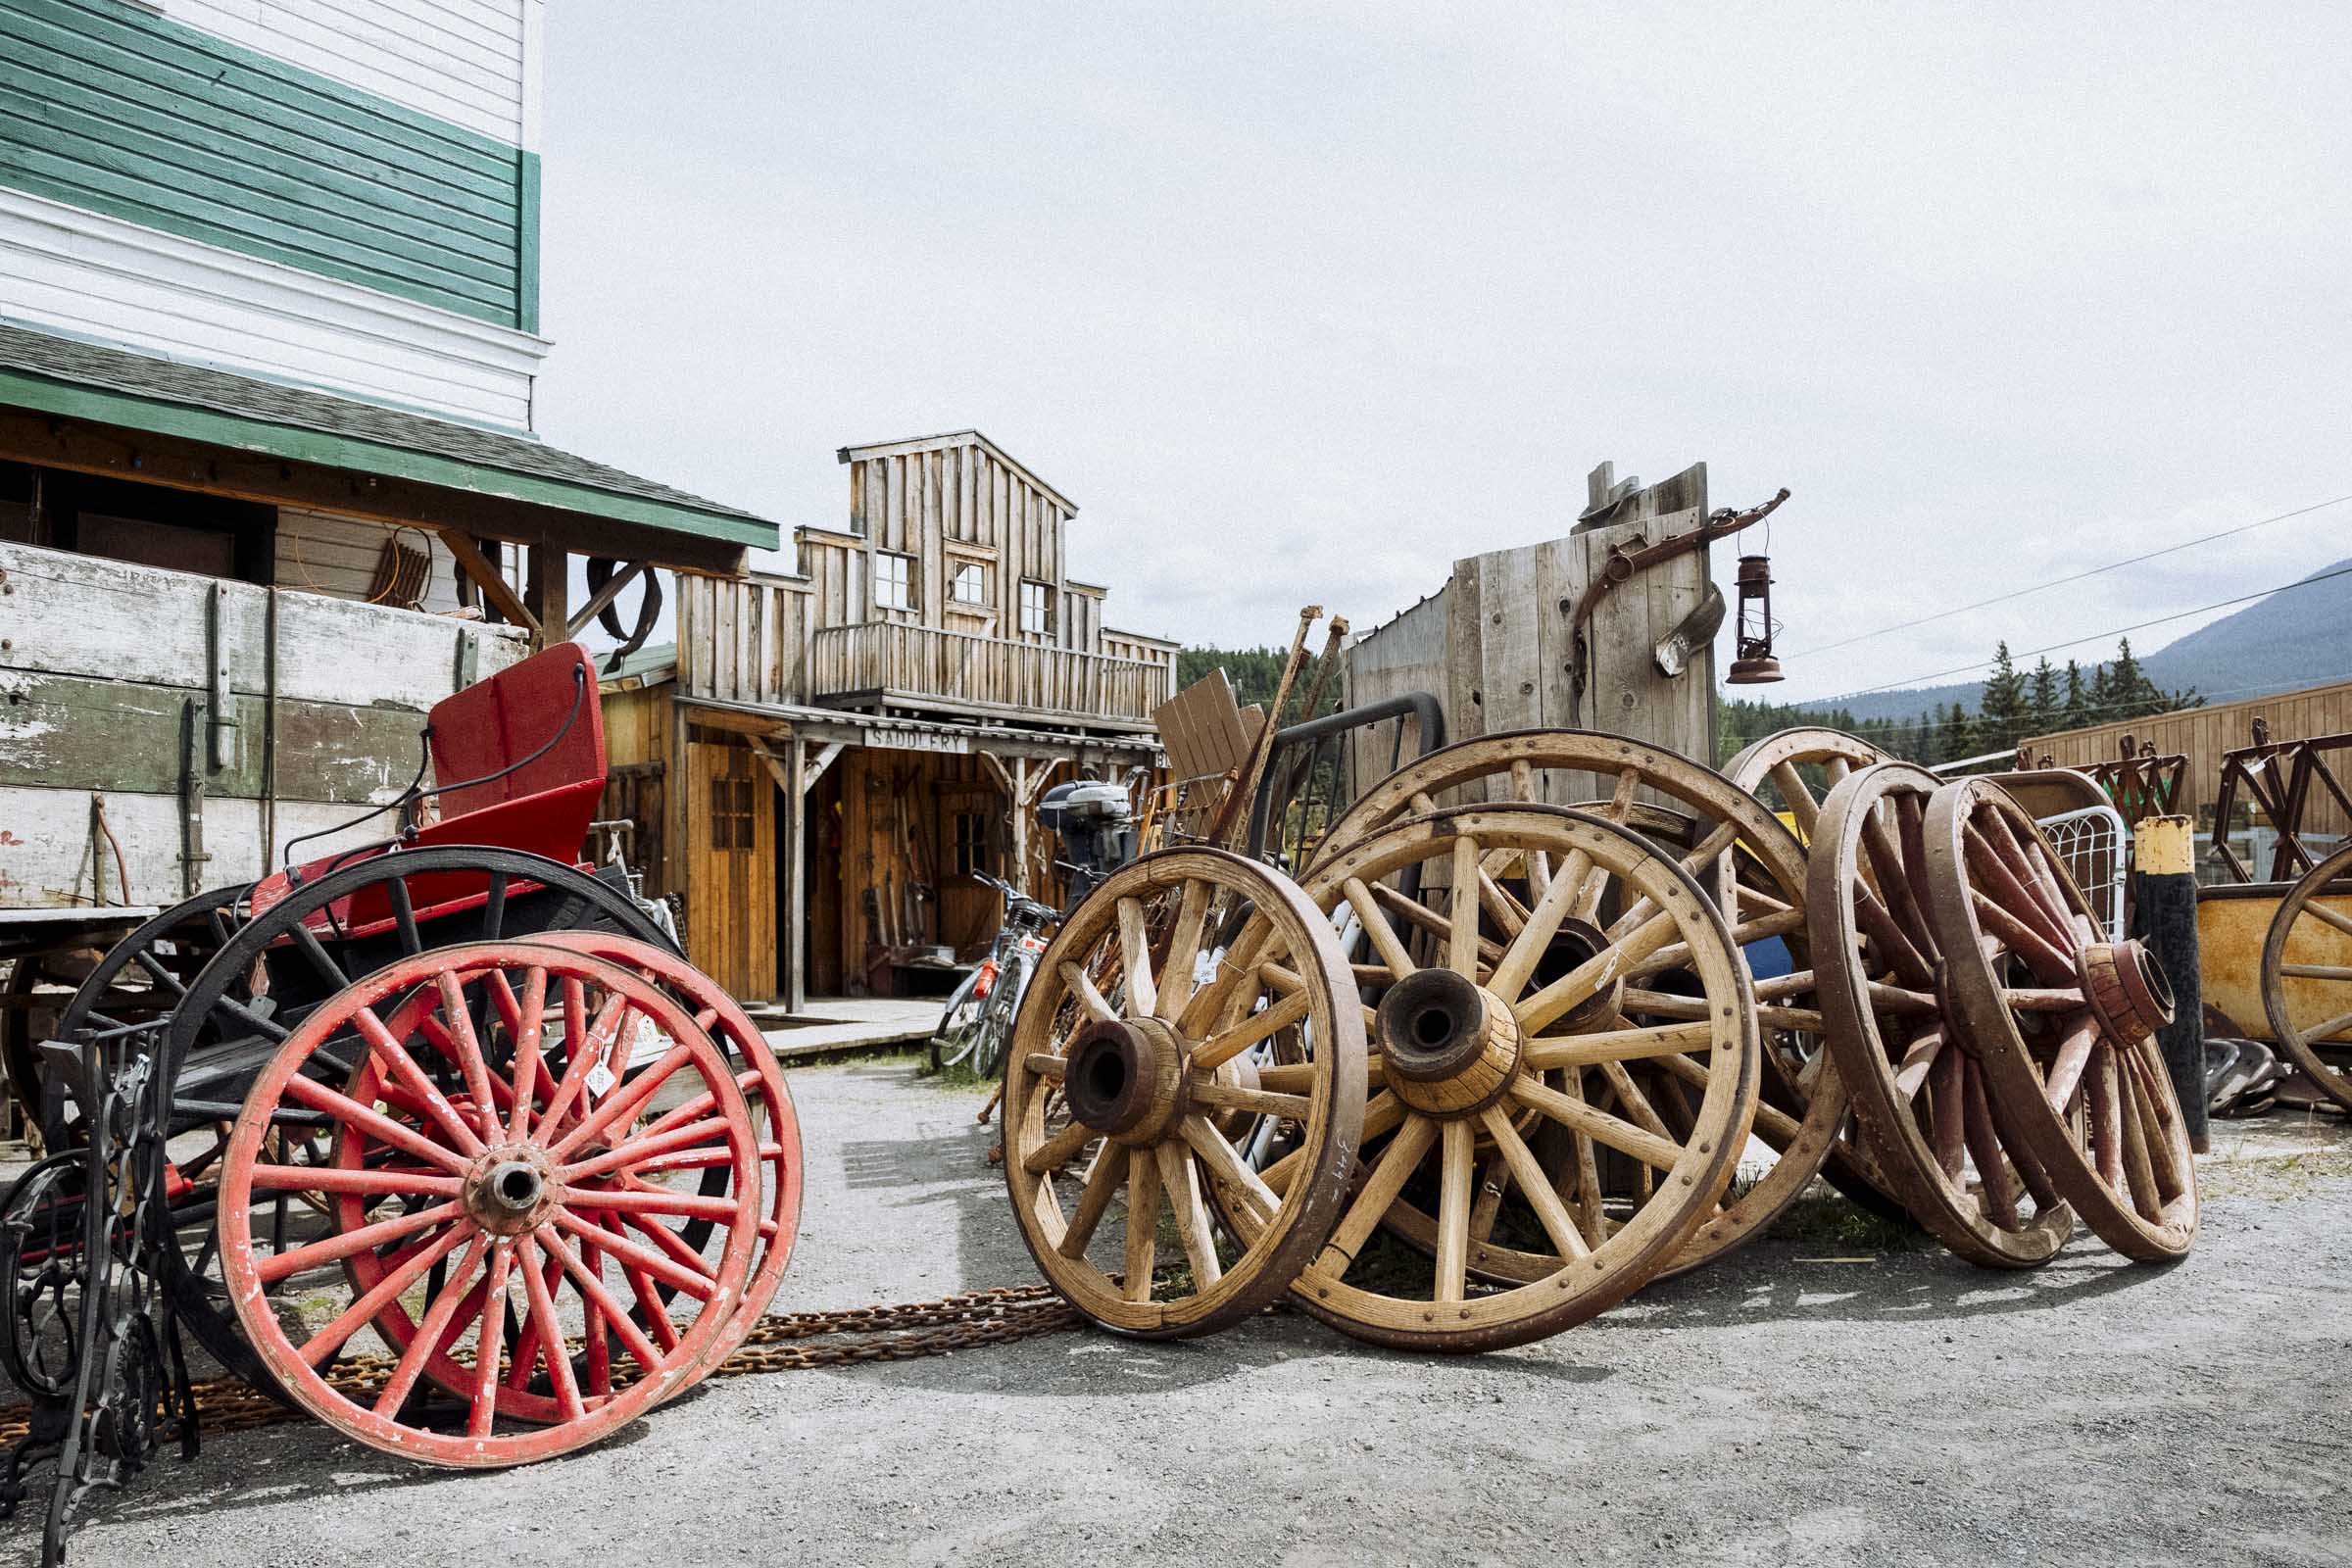 Wagon wheels at the Emporium in Clinton BC